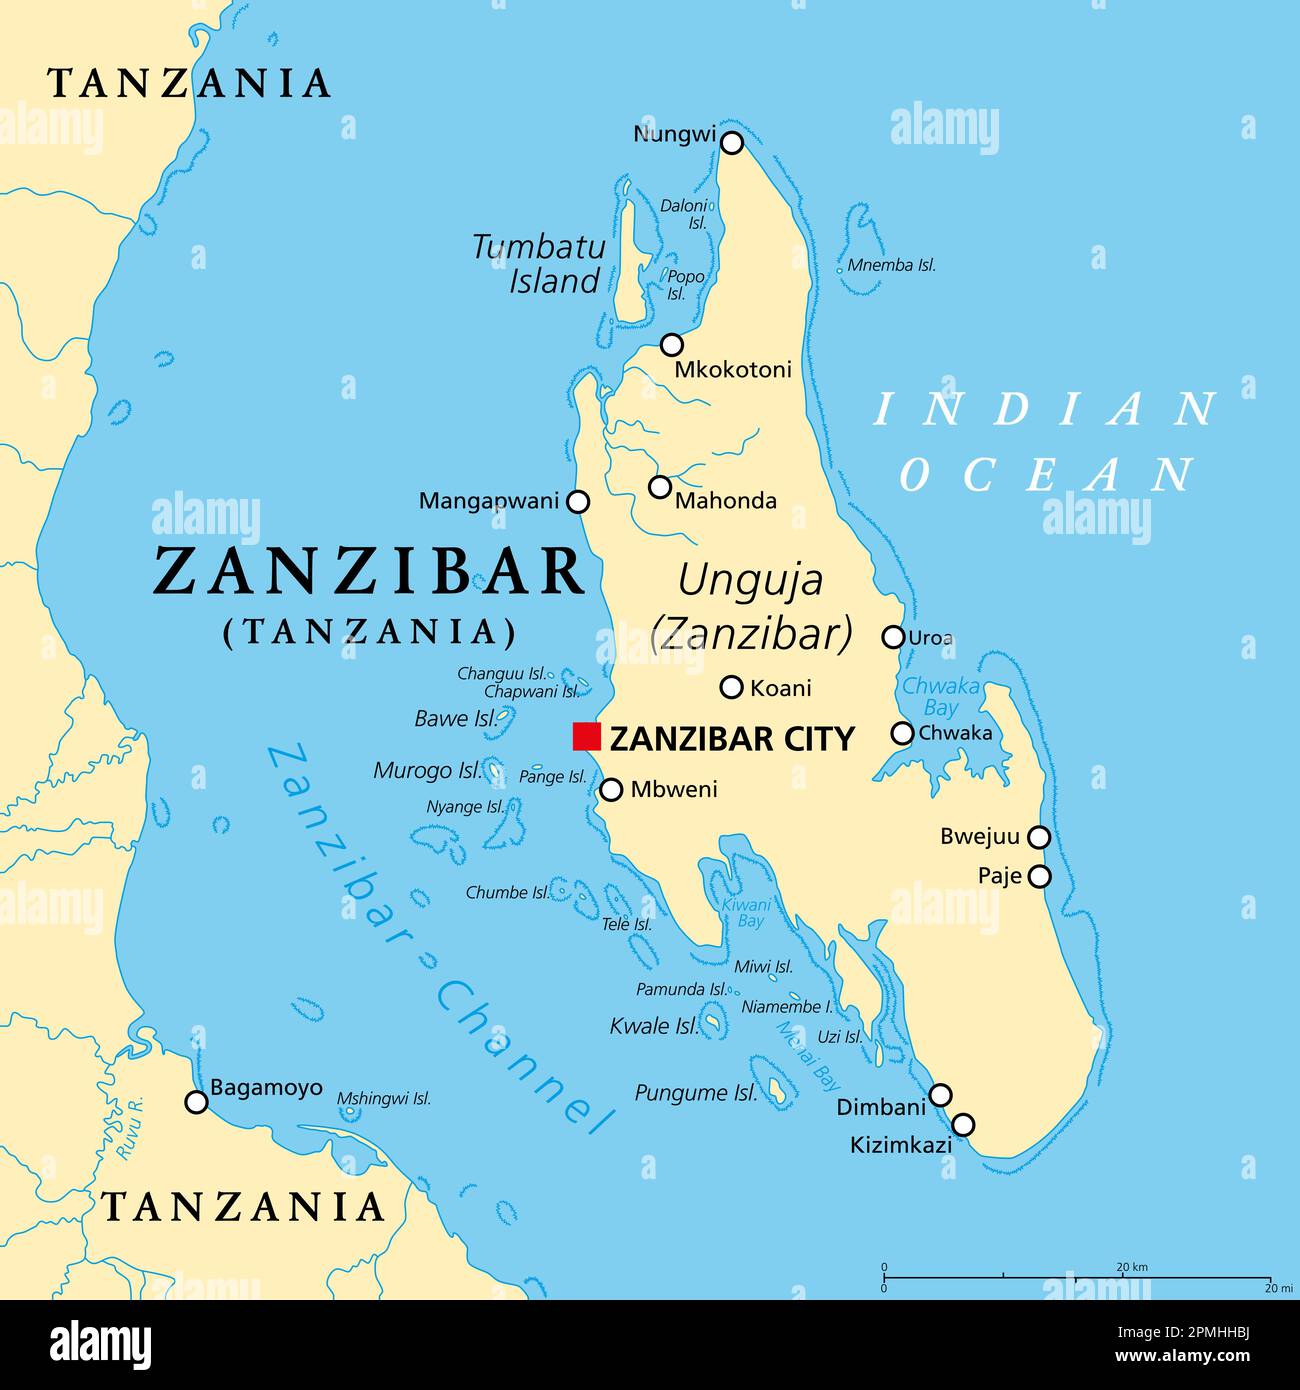 Zanzibar Island, Unguja, Tanzania, political map. Largest, most populated island of the Zanzibar Archipelago, in the Indian Ocean. Stock Photo